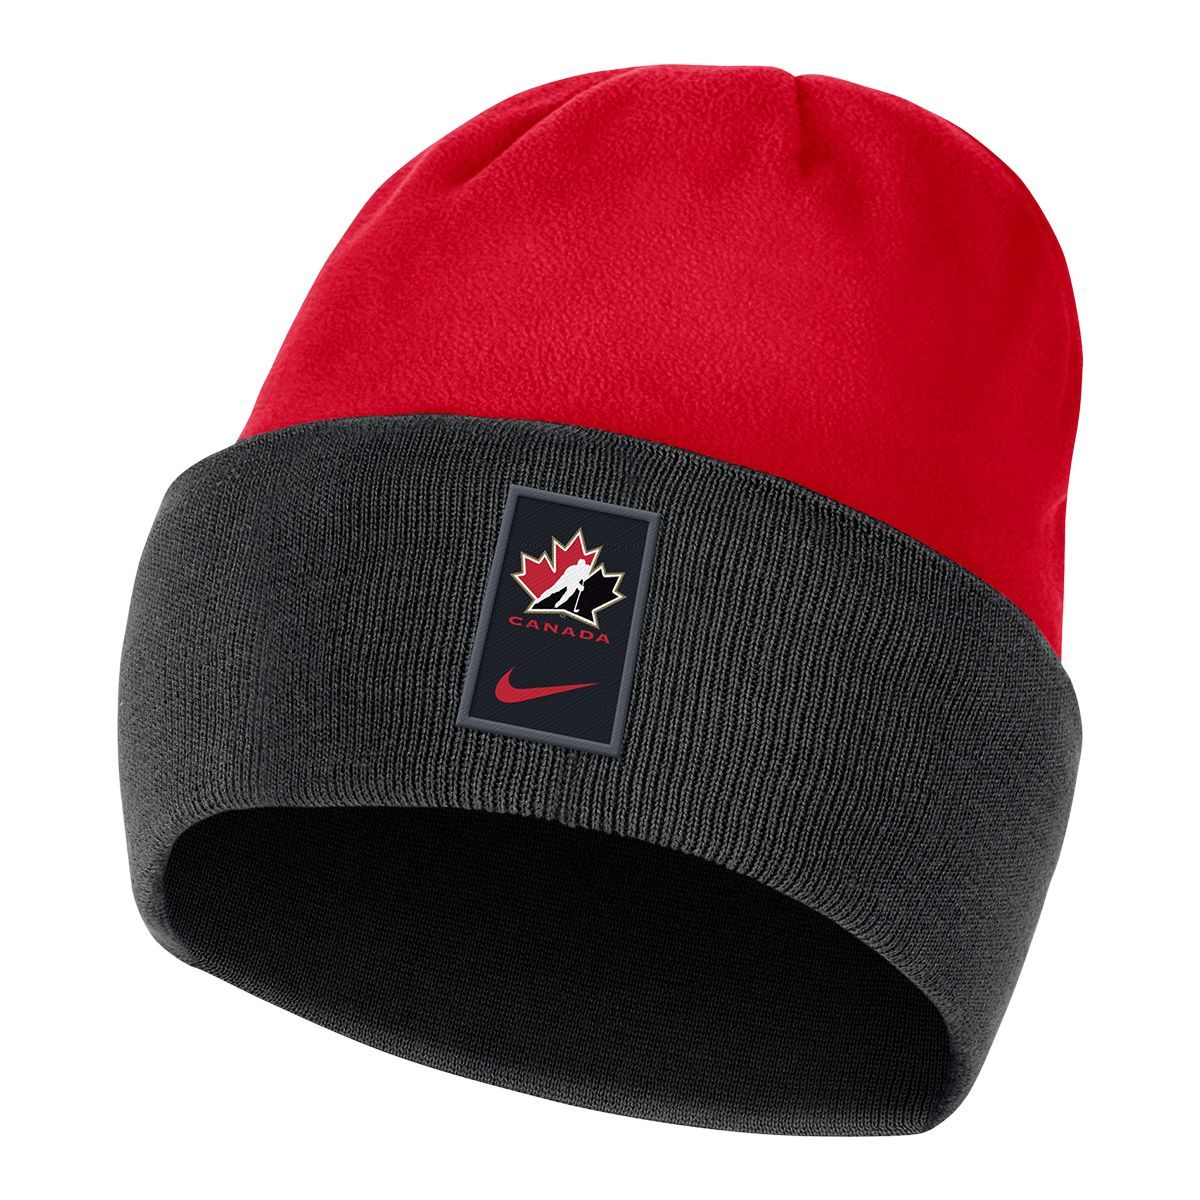 Team Canada Nike Polar Fleece Dri-FIT Knit Hat  Iihf  Hockey